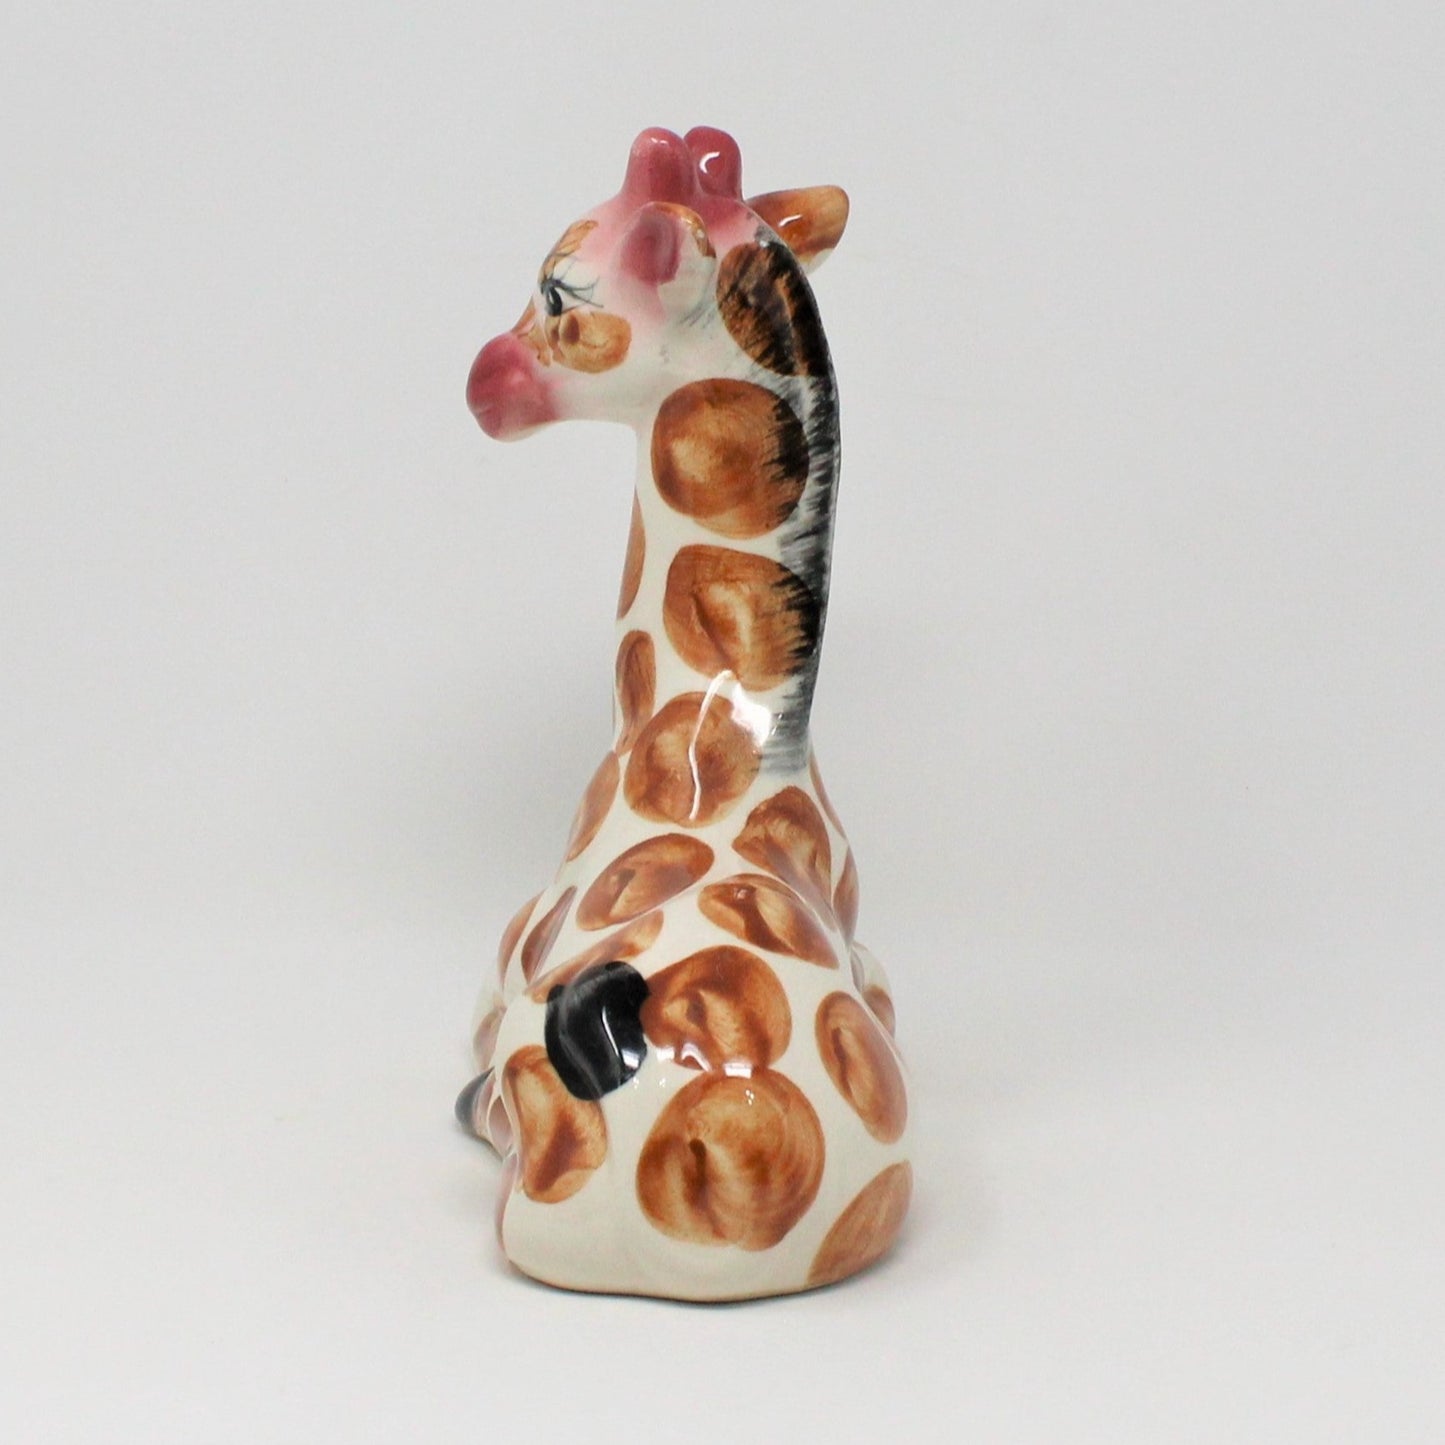 Figurine, Giraffe, Hand Painted Ceramic, Vintage